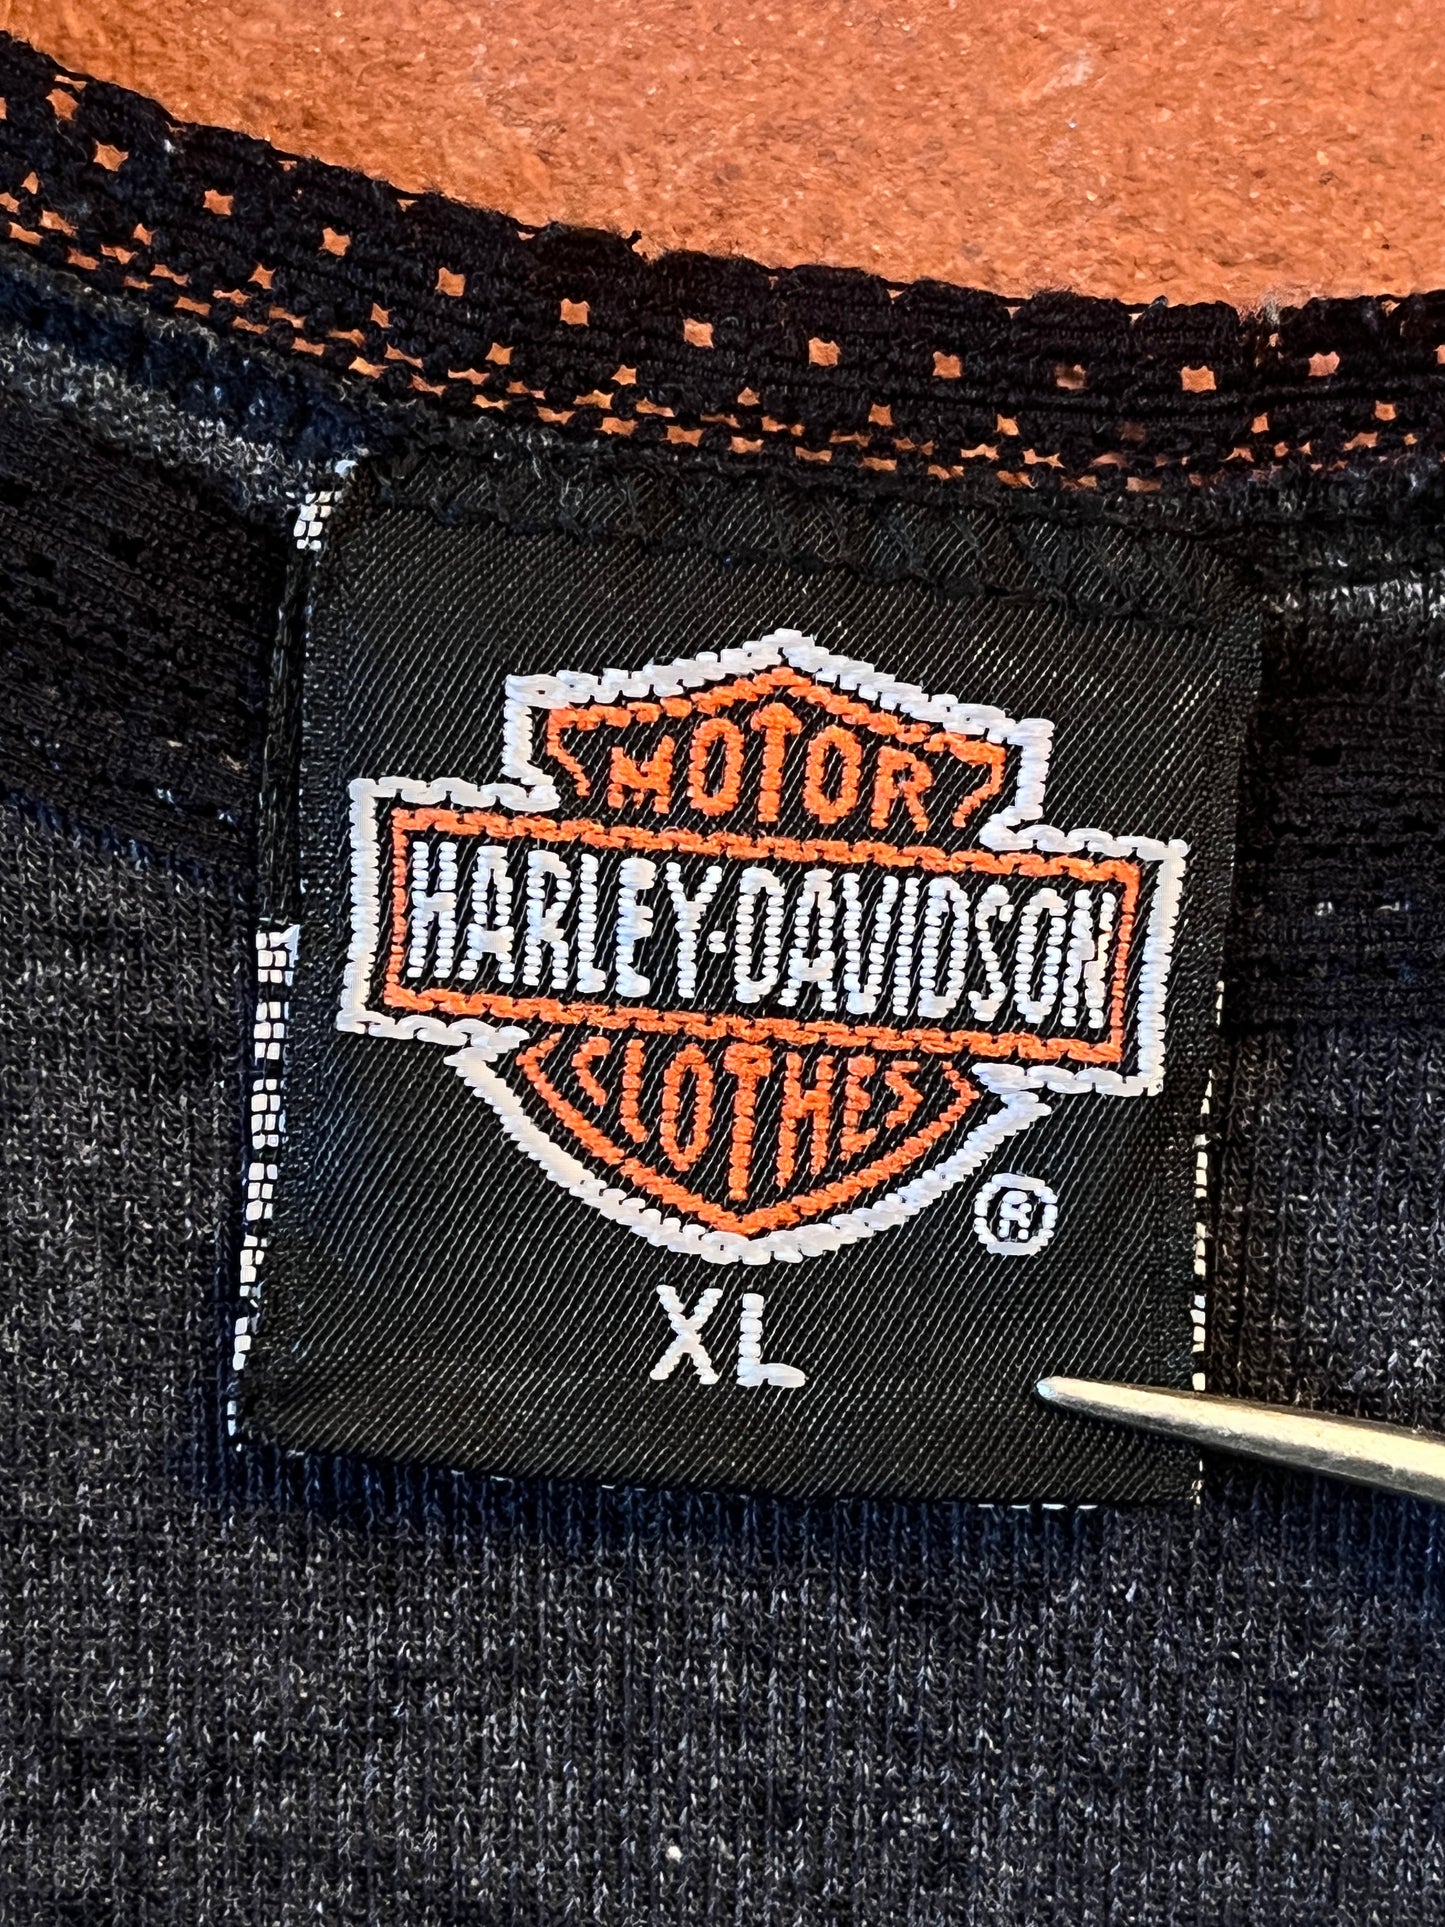 Harley Davidson 3D emblem black cat tank Redding, California '91